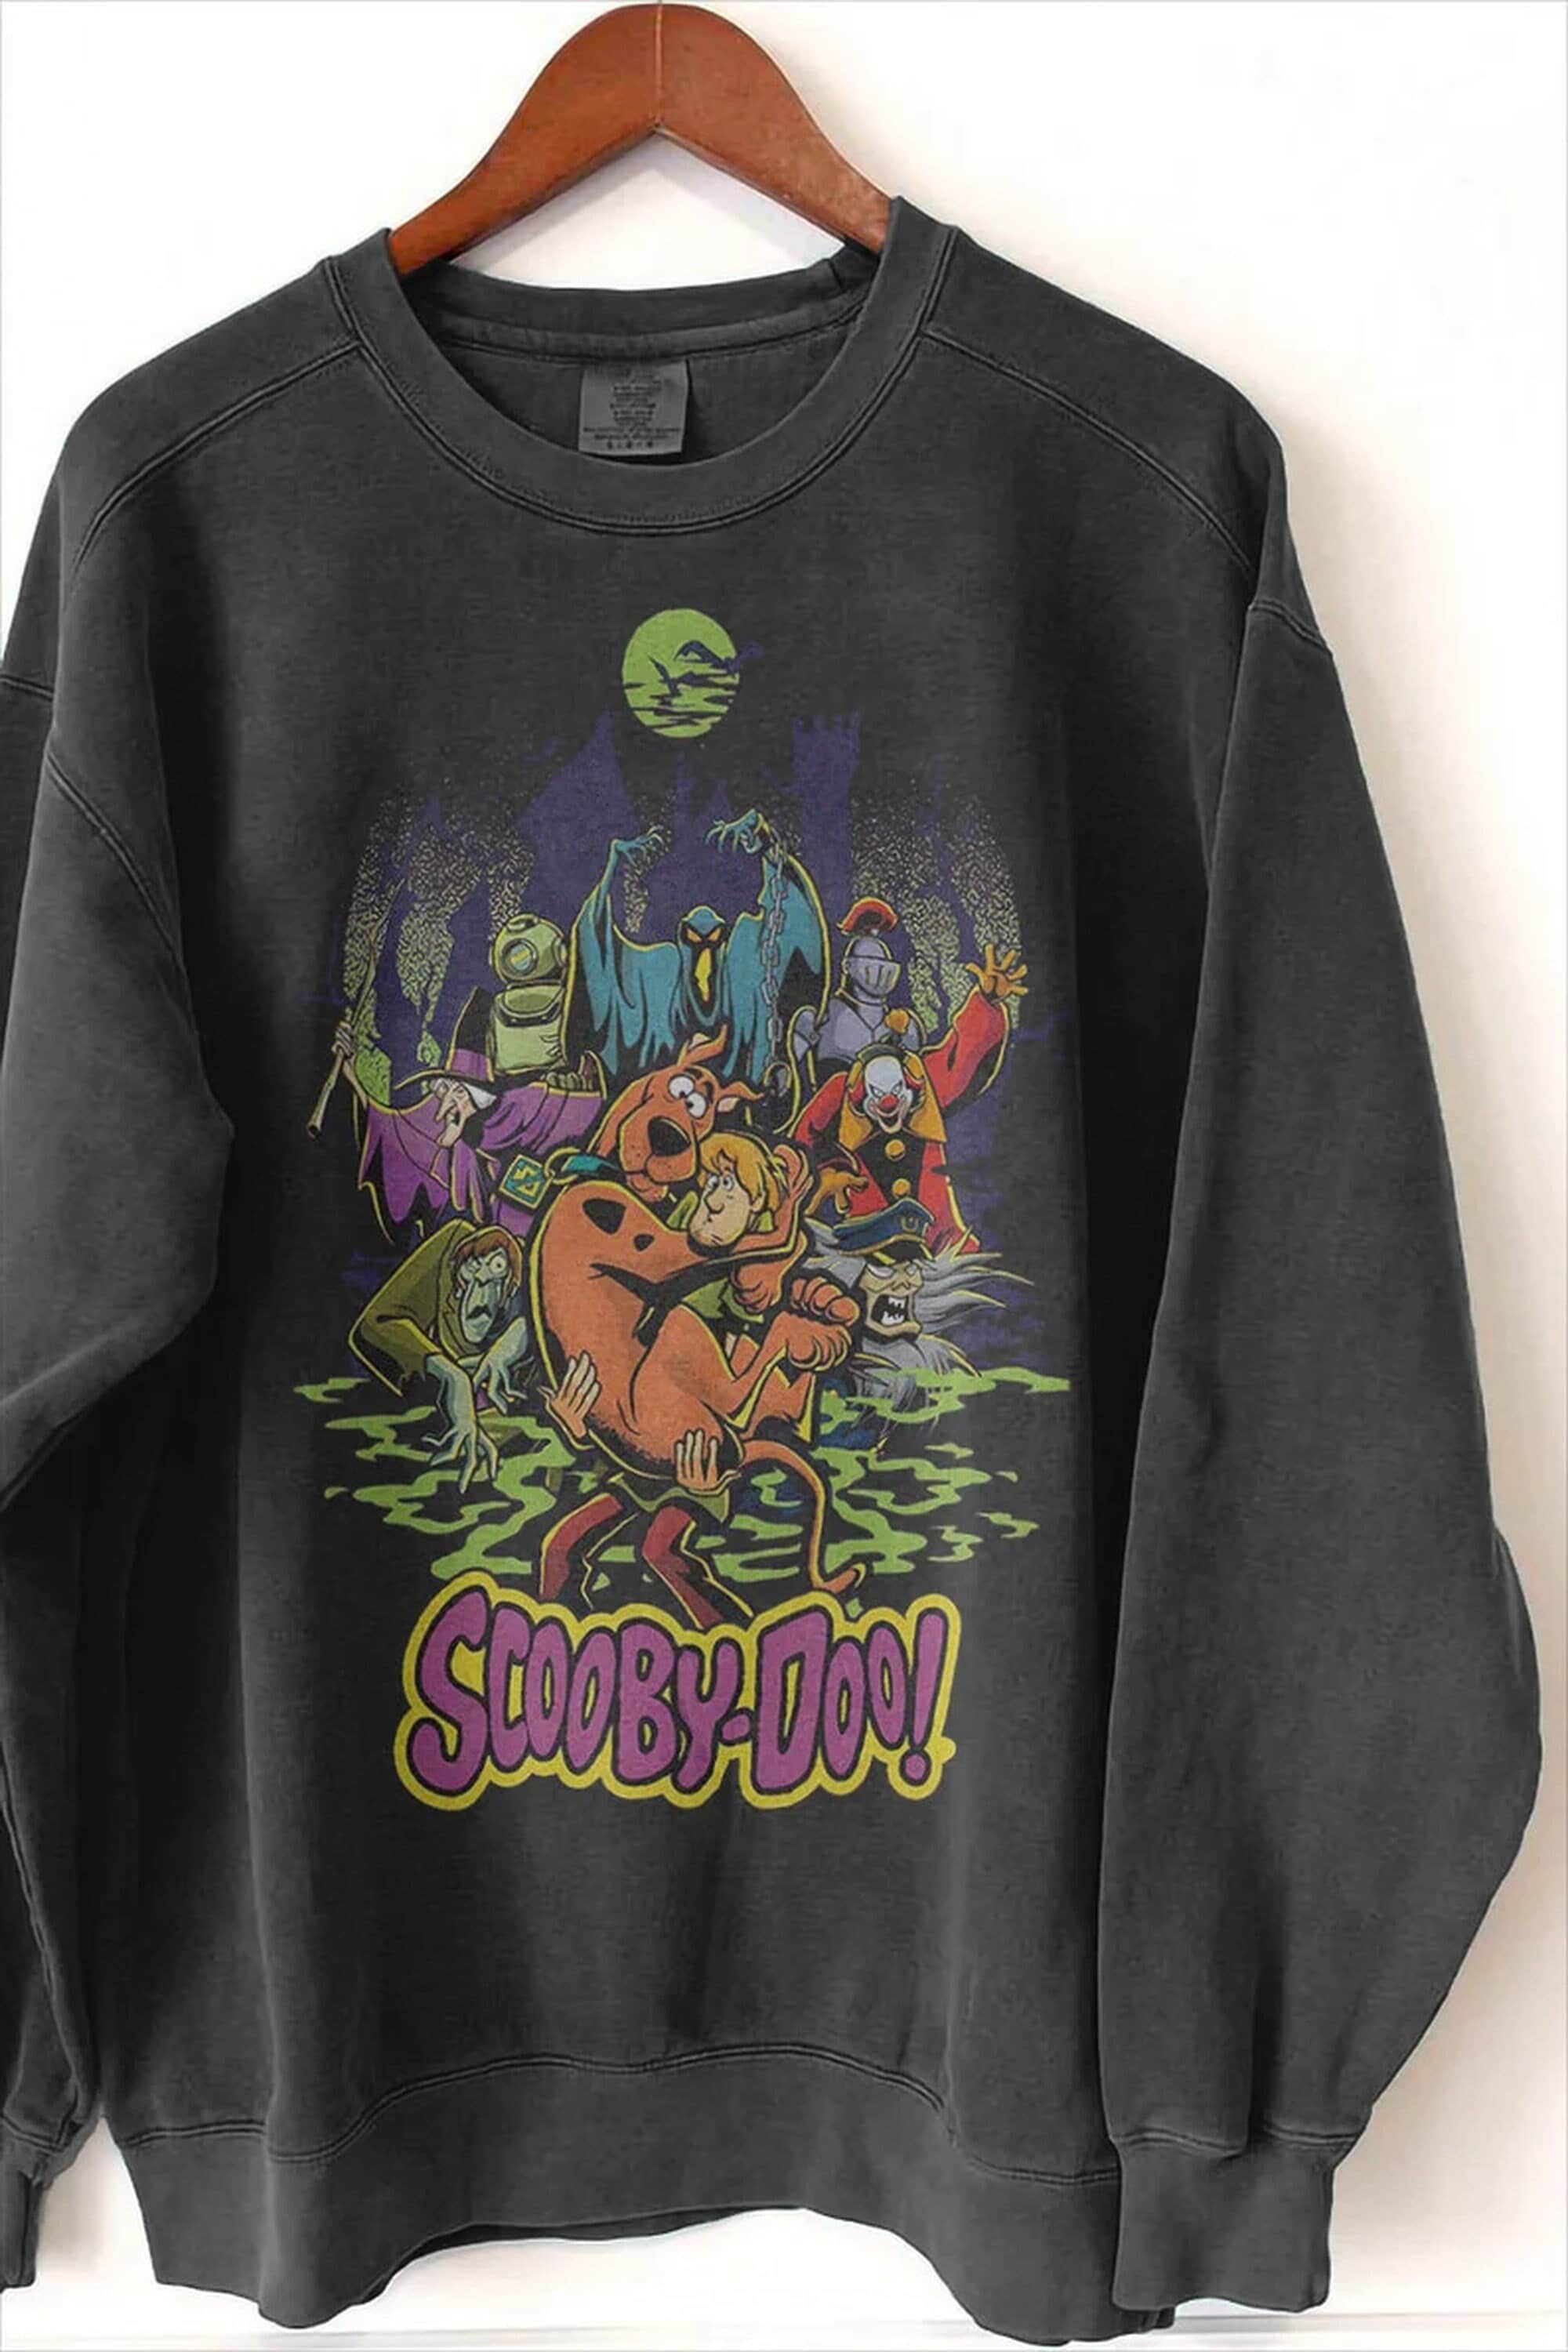 Scooby - Etsy doo hoodie